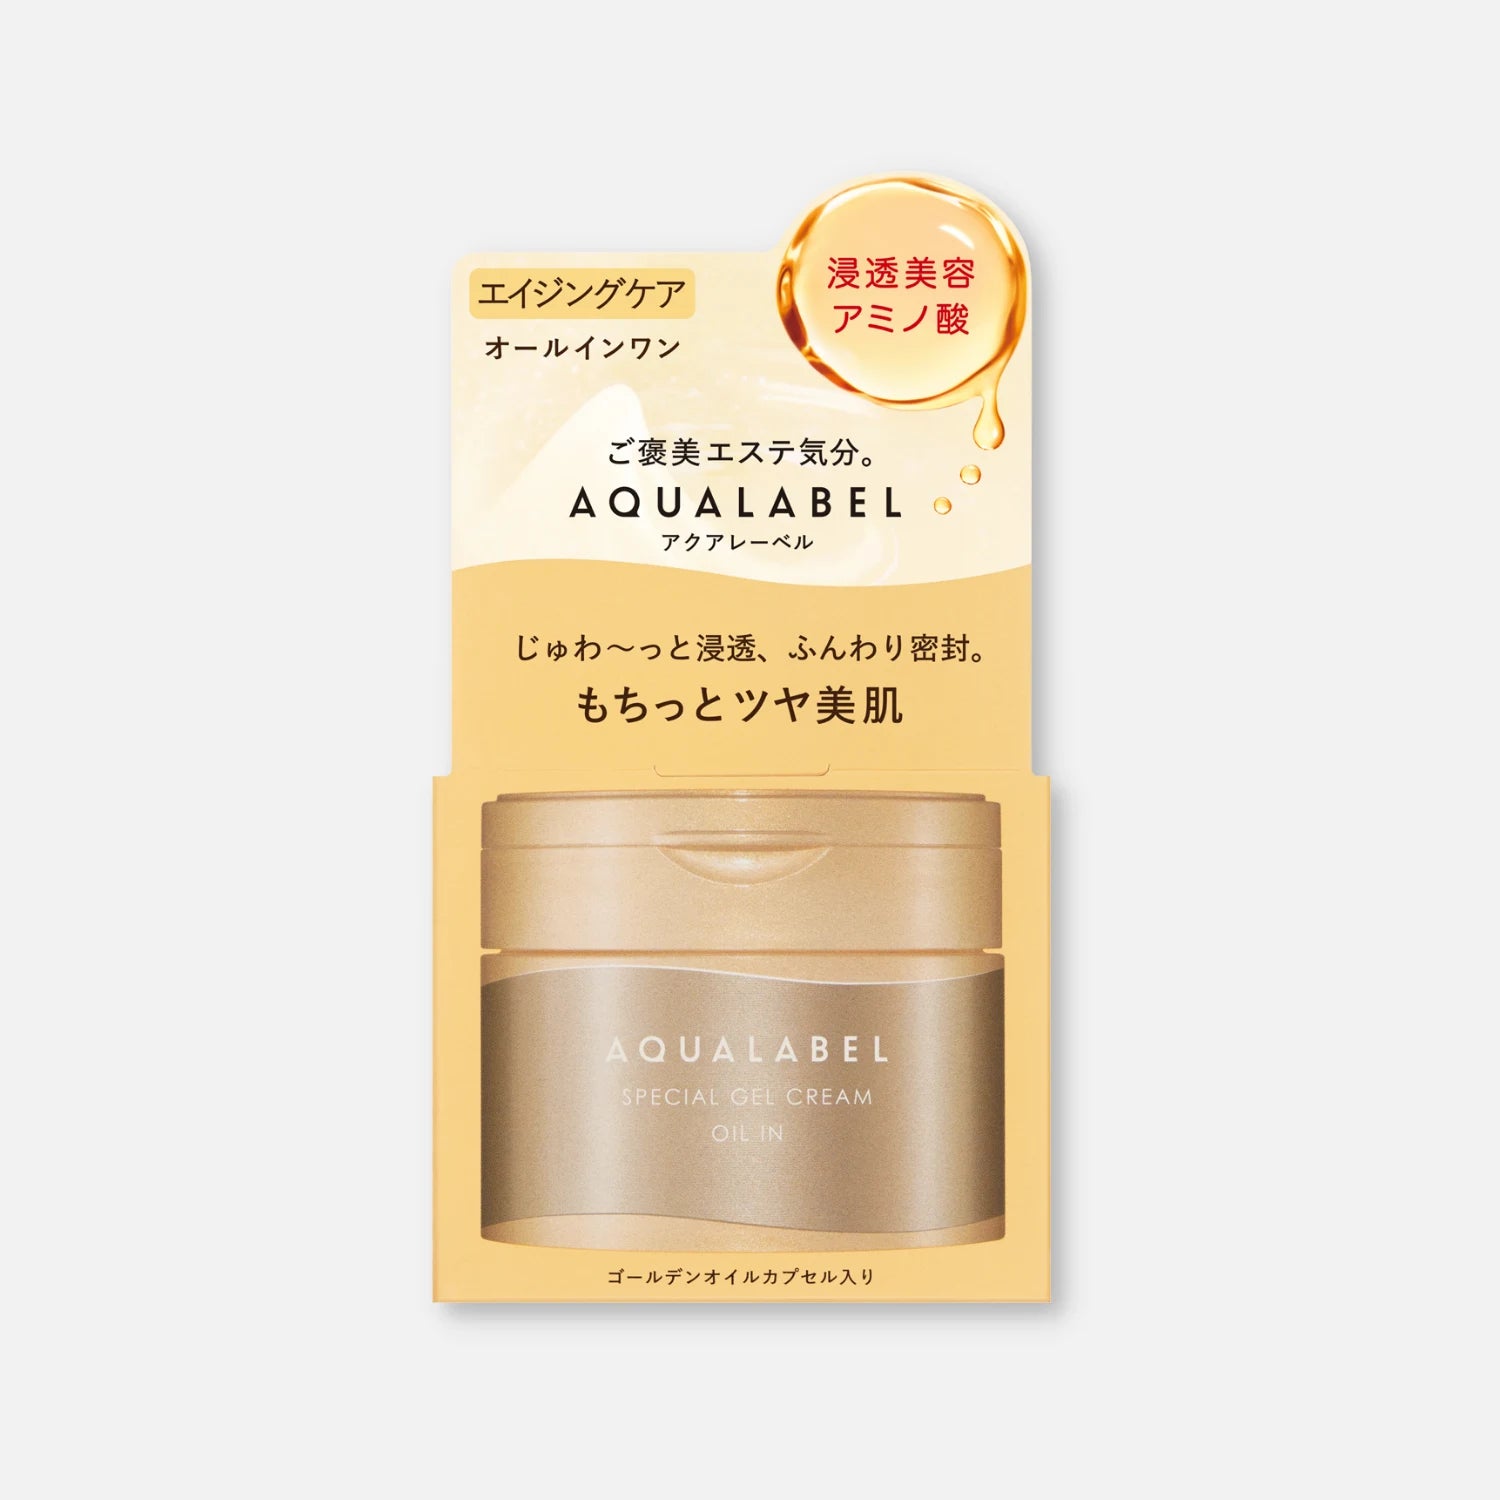 Shiseido AQUALABEL Special Gel Cream EX Oil In 90g - Buy Me Japan